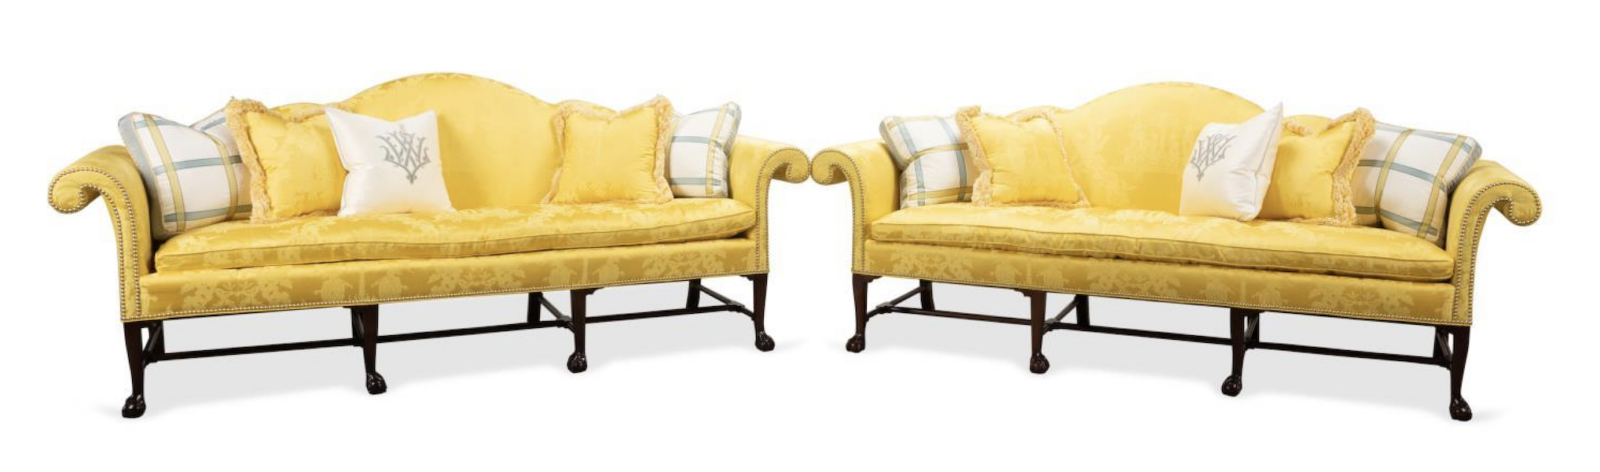 Pair of Kindel Irish Georgian Collection camelback sofas, $12,100. Image courtesy of Ahlers & Ogletree Auction Gallery